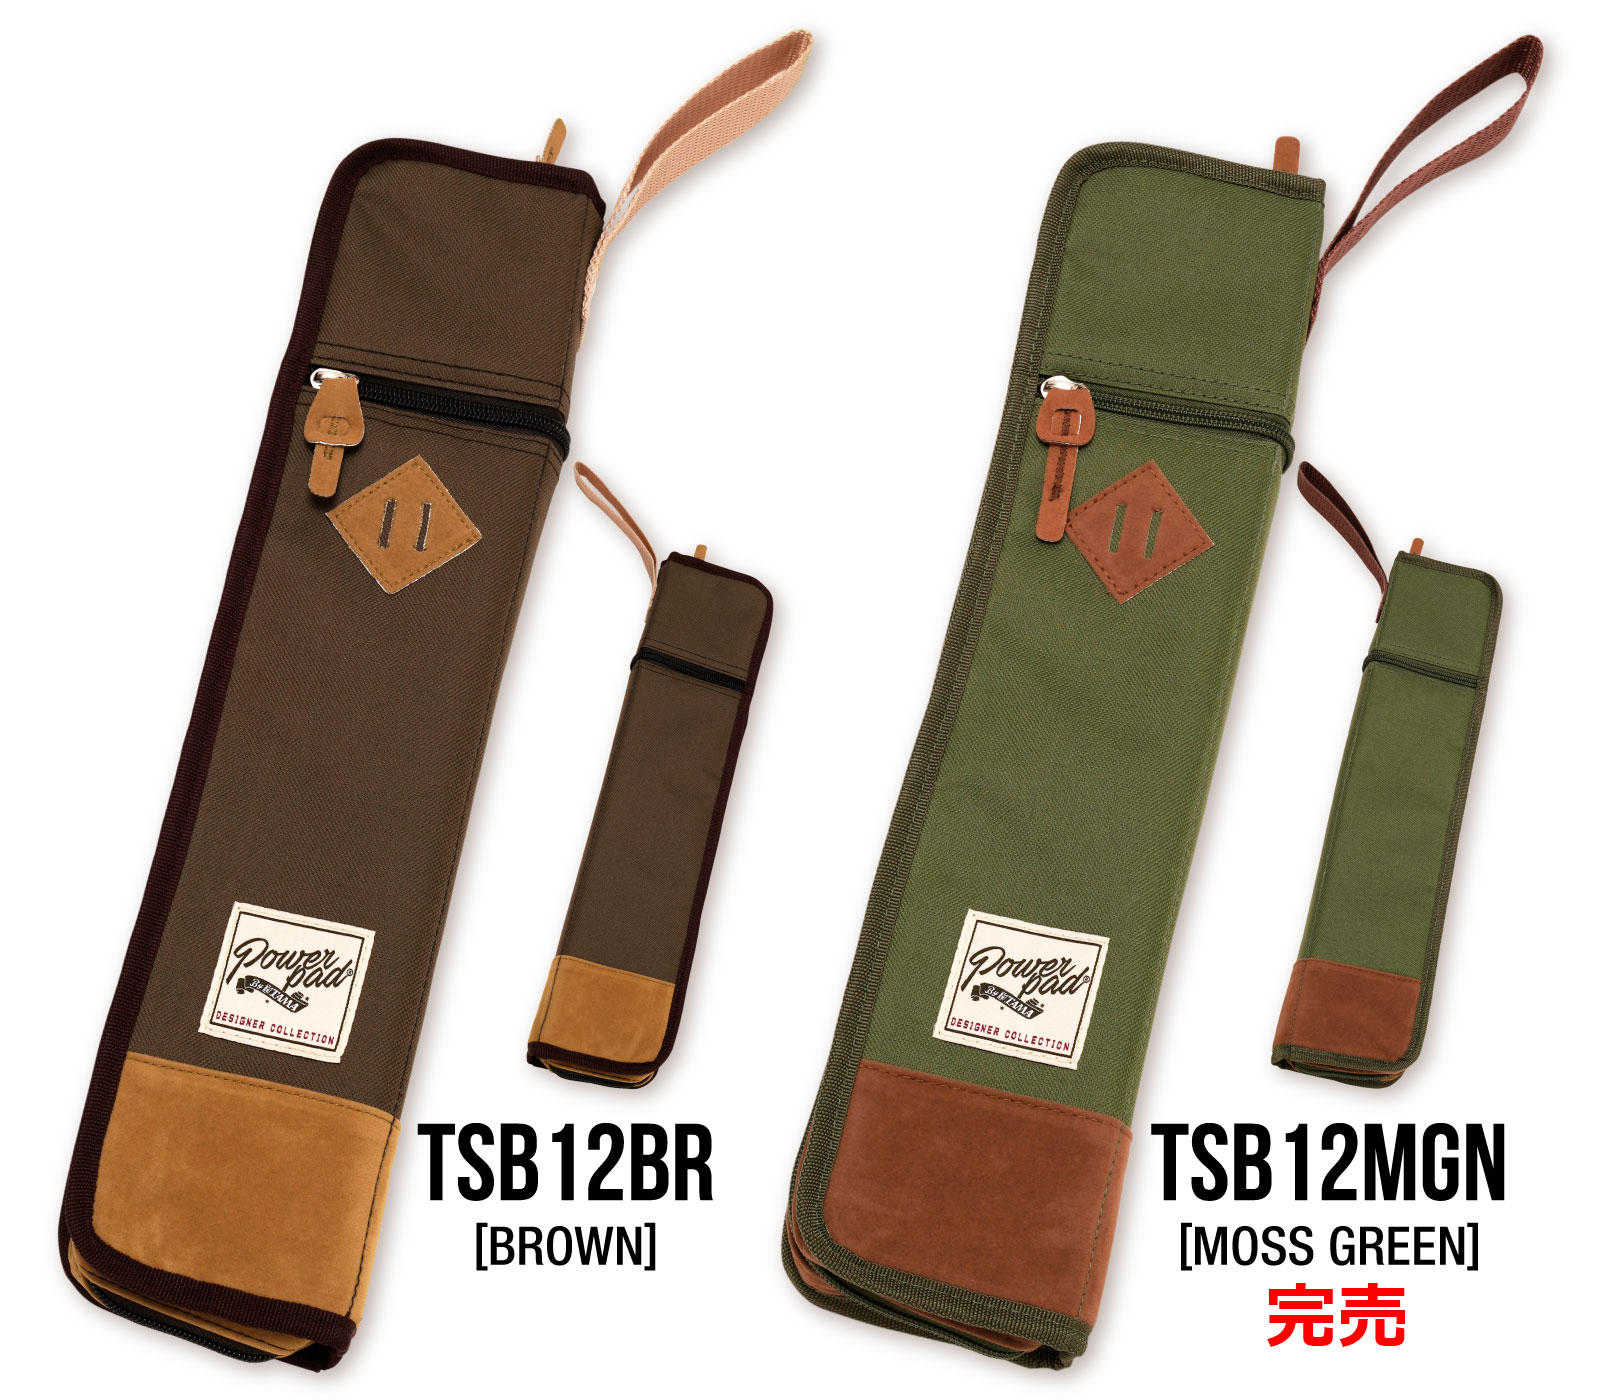 TAMA "POWERPADR Designer Collection" Stick Bags TSB12